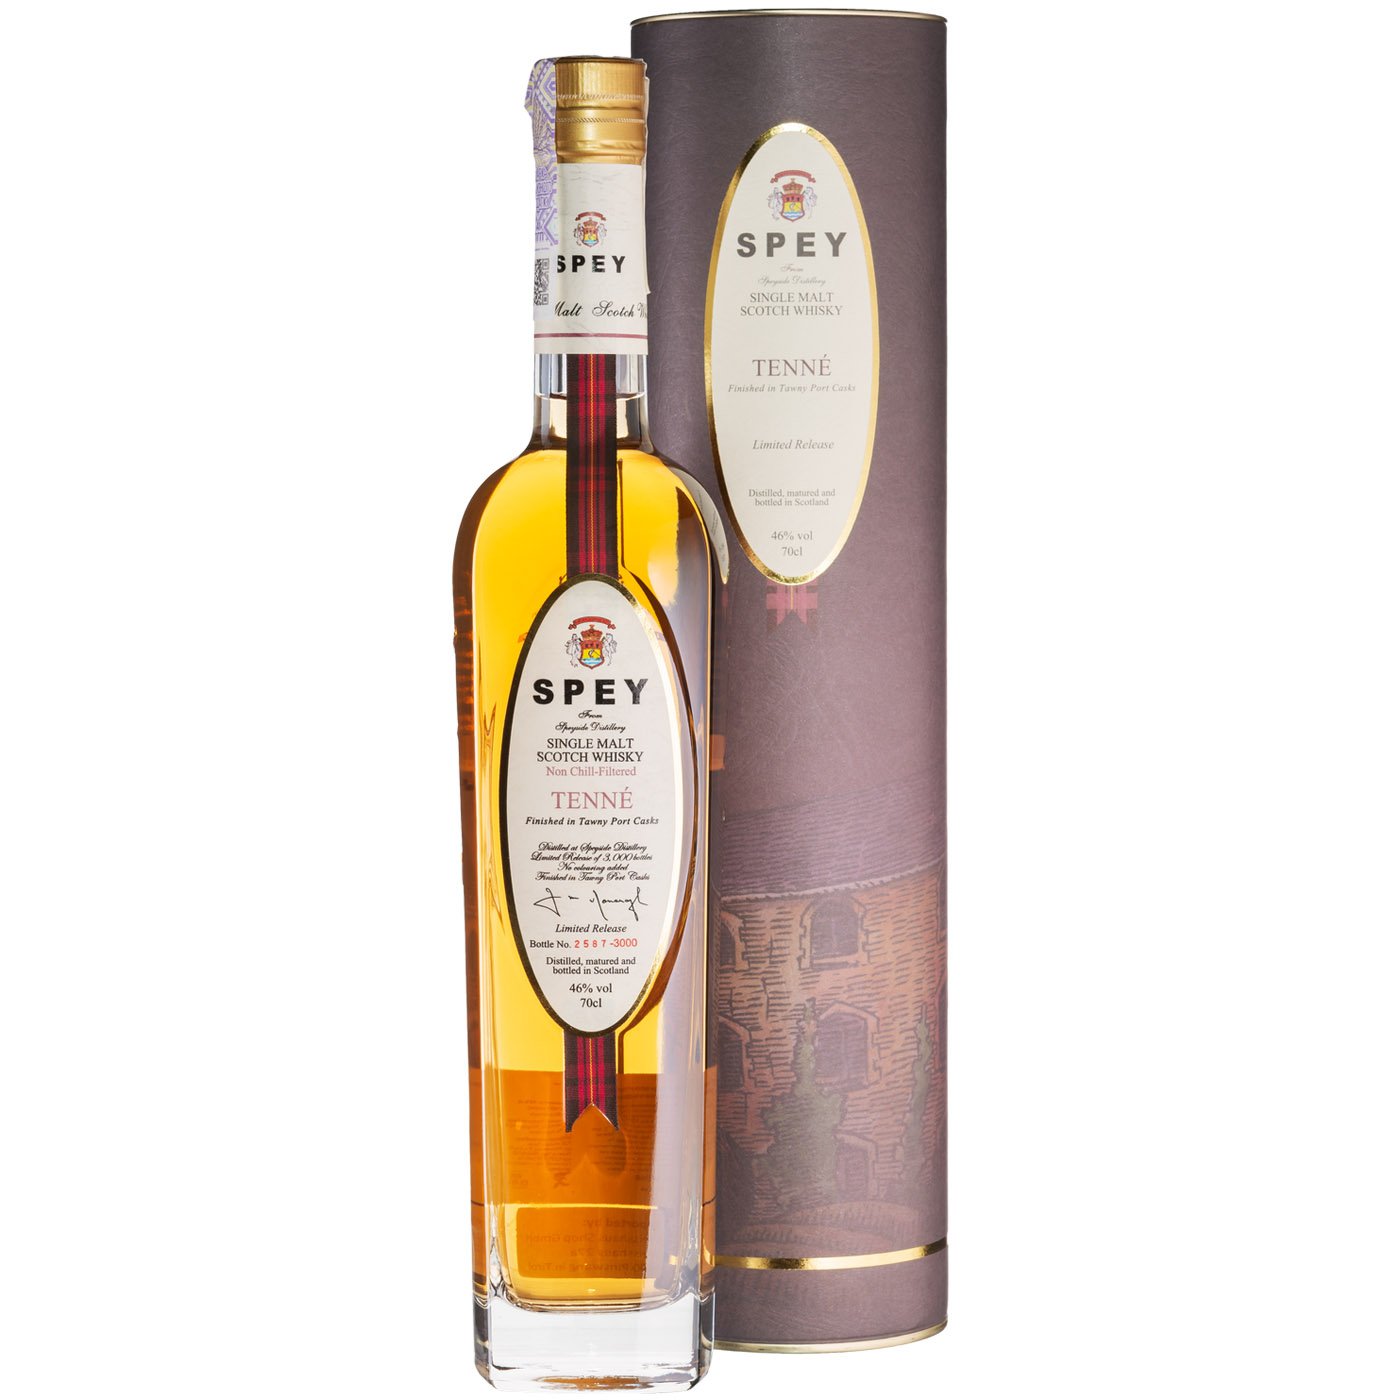 Виски Spey Tenne Single Malt Scotch Whisky, в подарочной упаковке, 46%, 0,7 л - фото 1